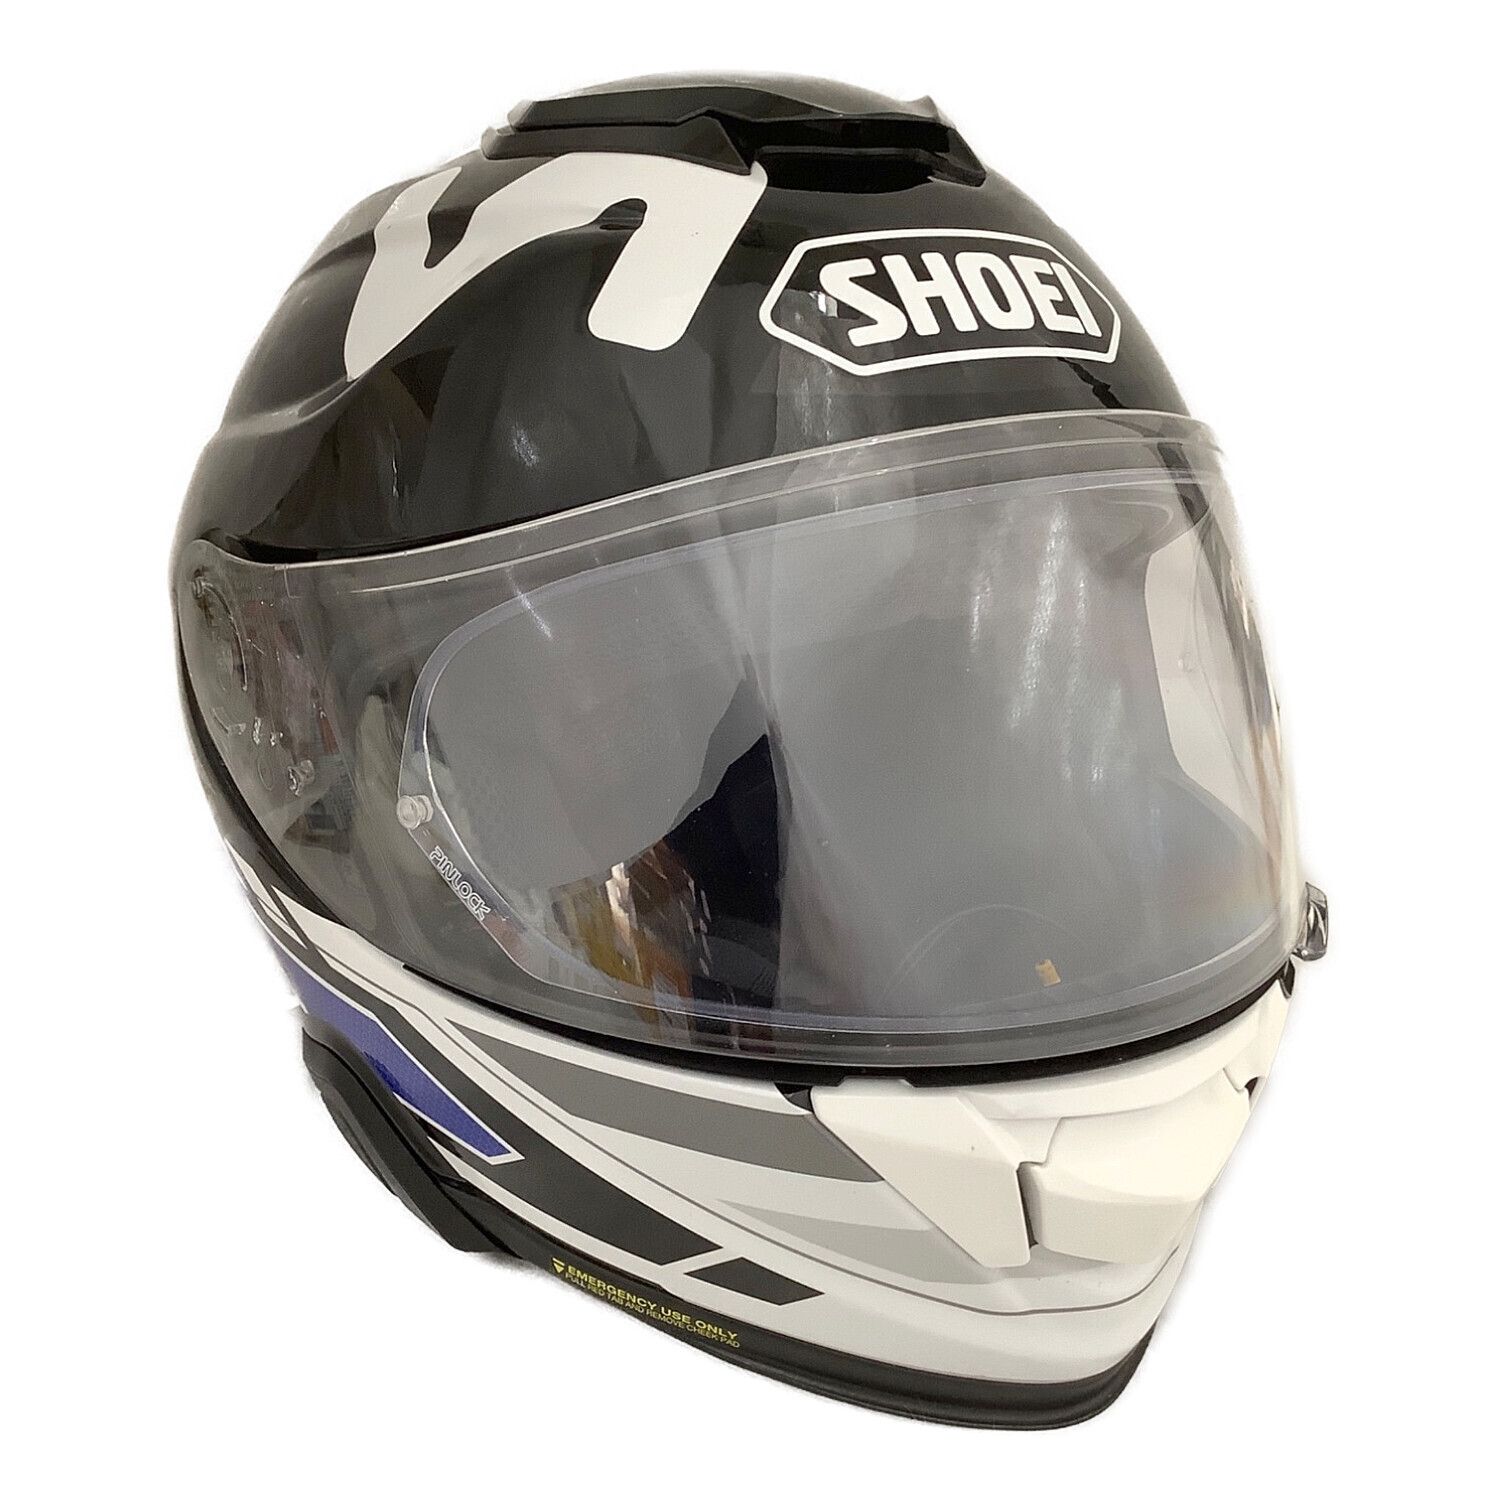 SHOEI (ショーエイ) バイク用ヘルメット SIZE L 2020年モデル DAYTONA ...